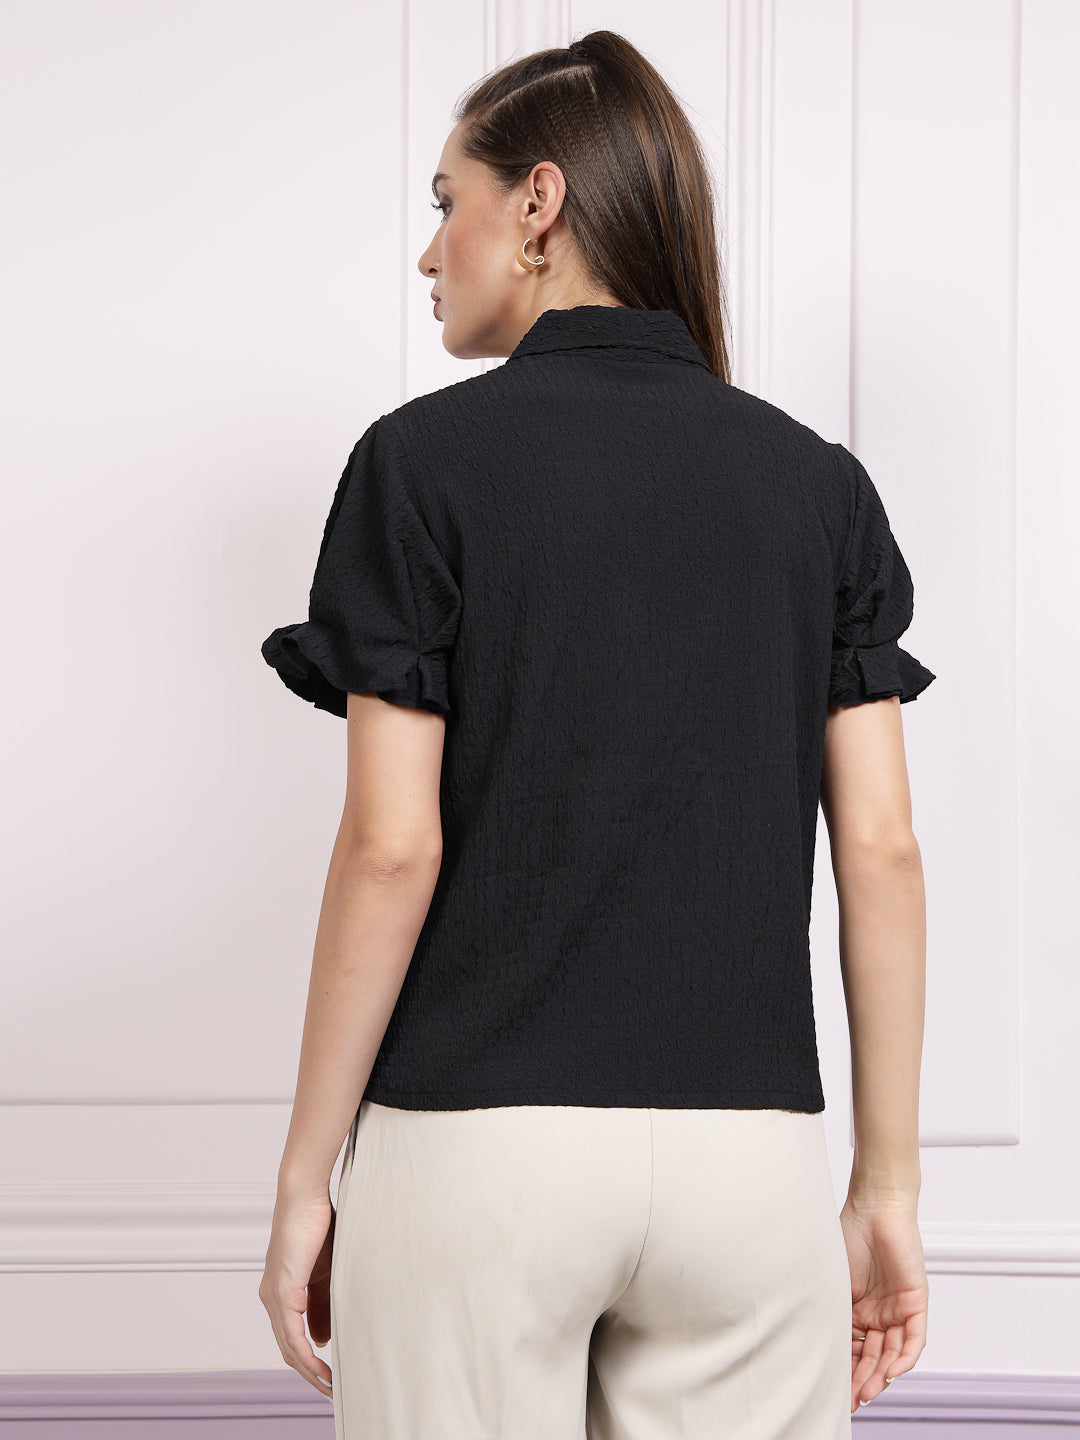 Athena Black Self Design Shirt Style Top